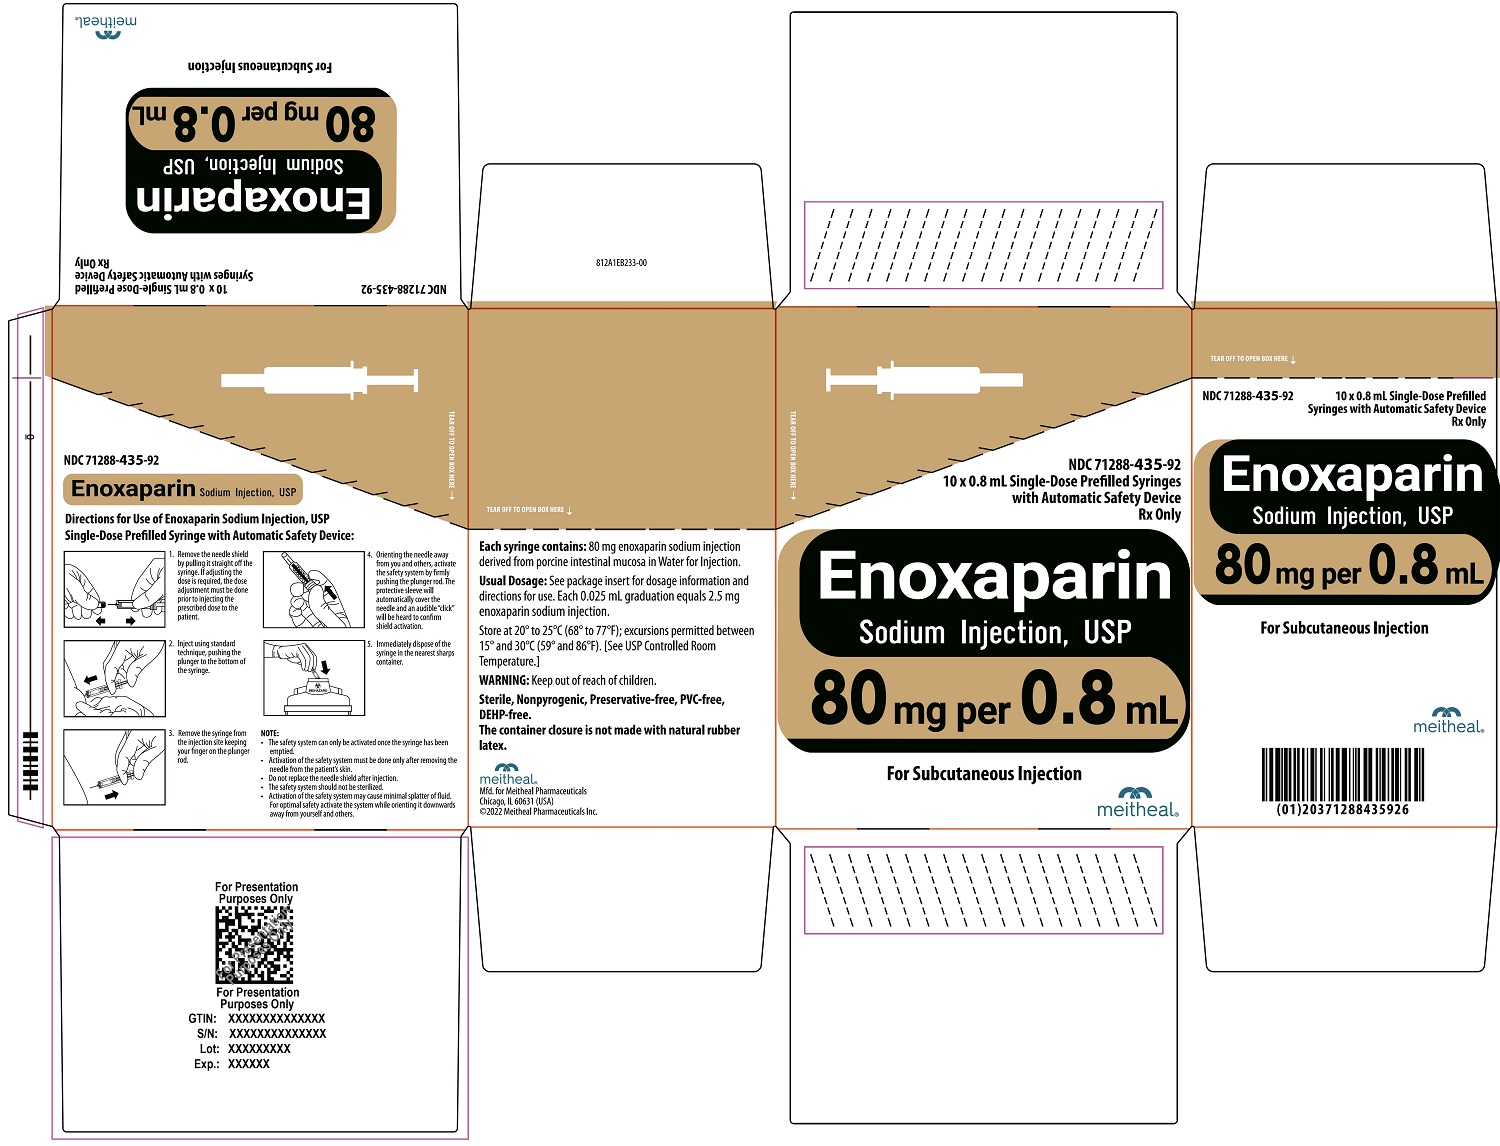 Principal Display Panel – Enoxaparin Sodium Injection, USP 80 mg Carton